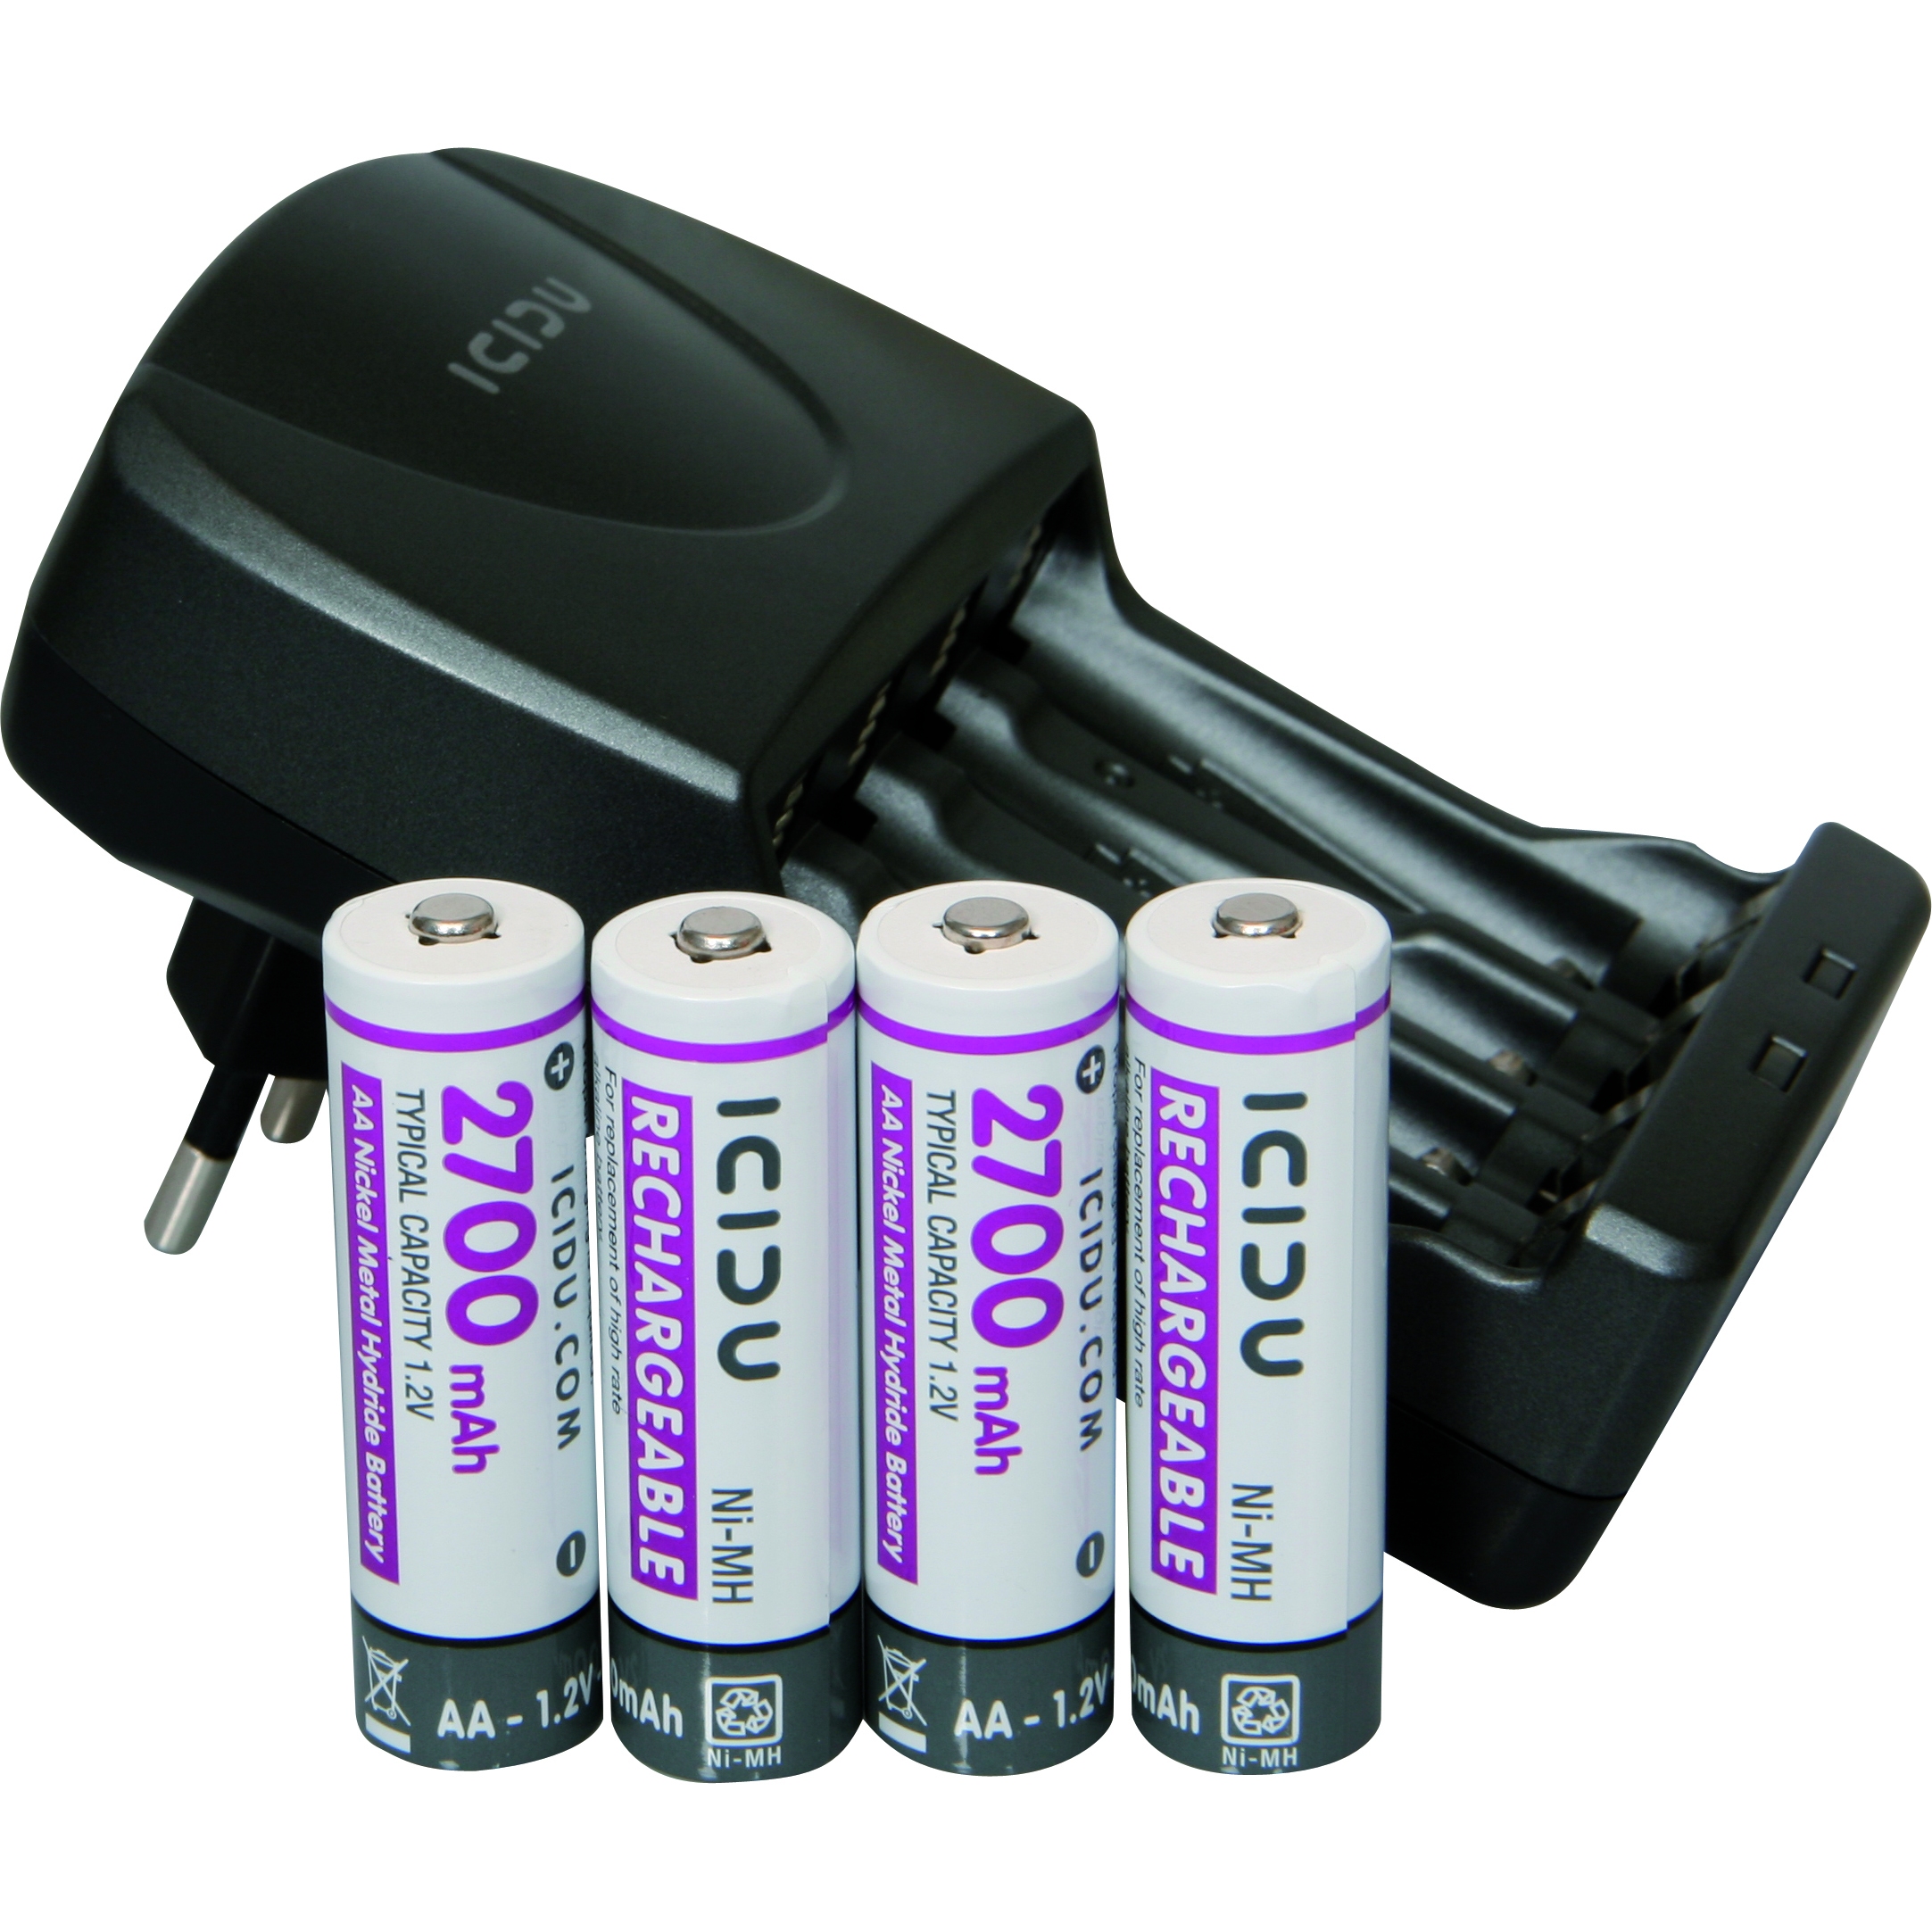 Best battery